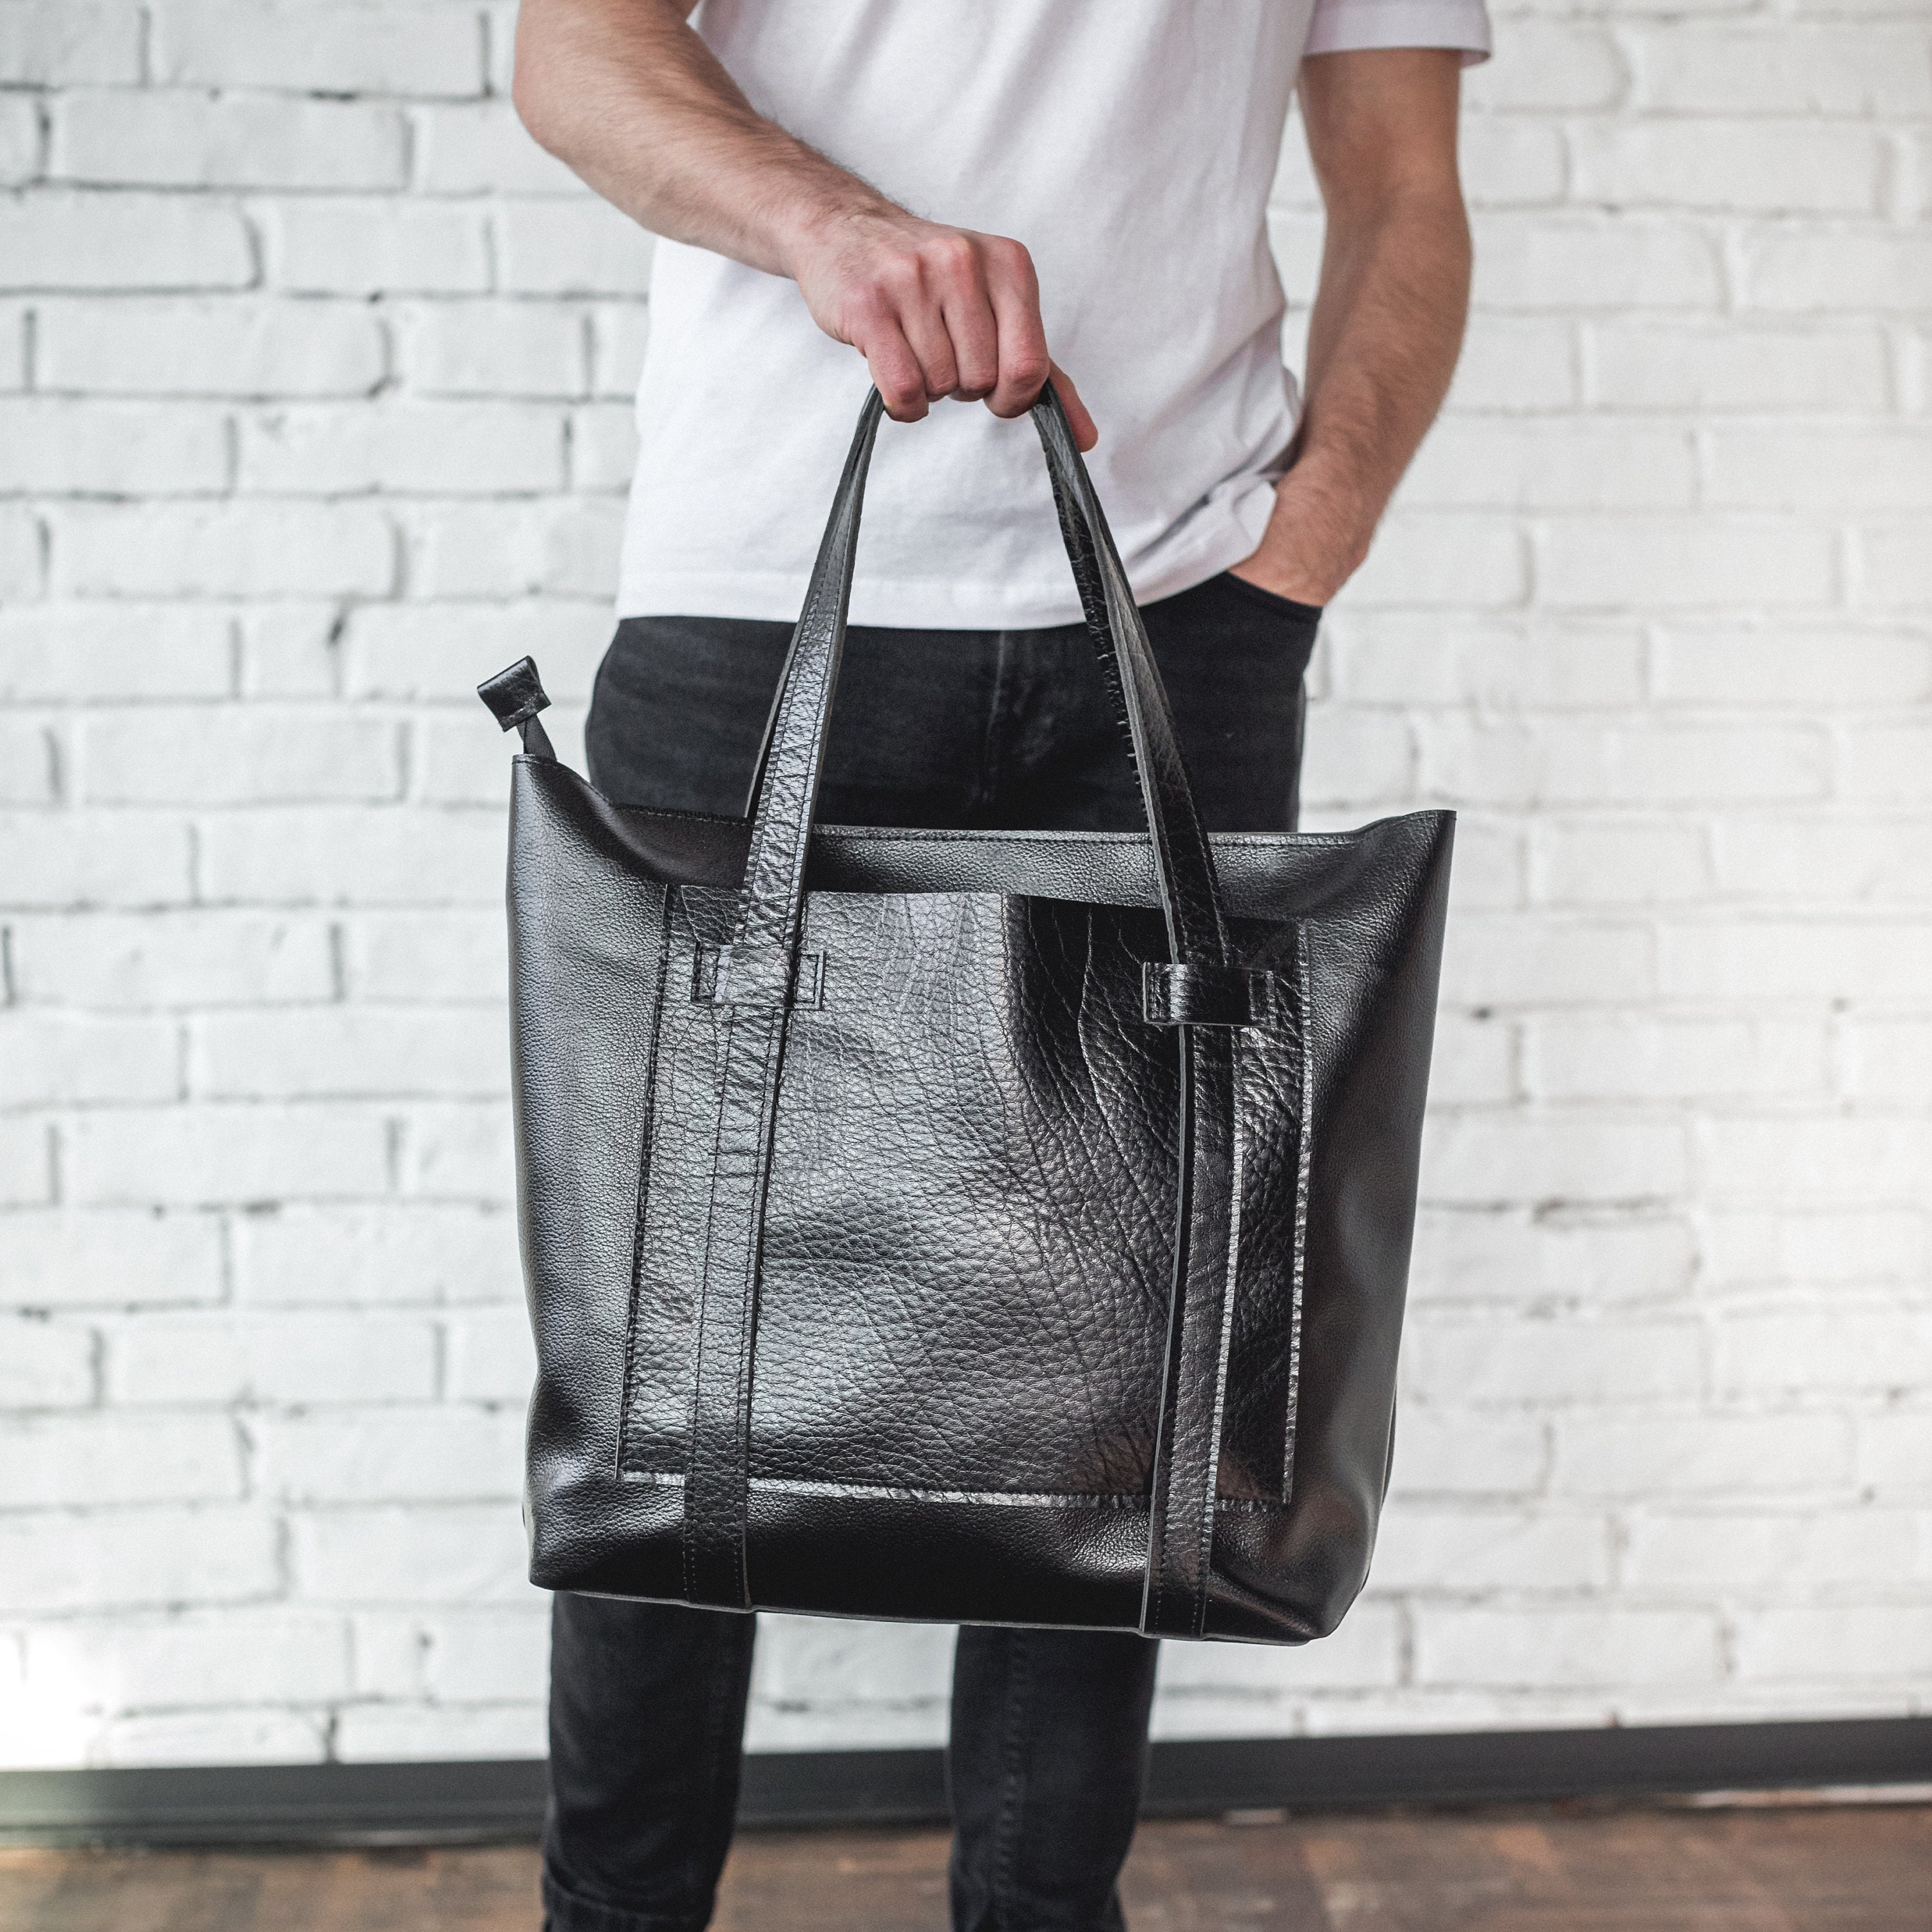 Leather Tote Bag For Men With Zipper Black Leather Shoulder | Etsy